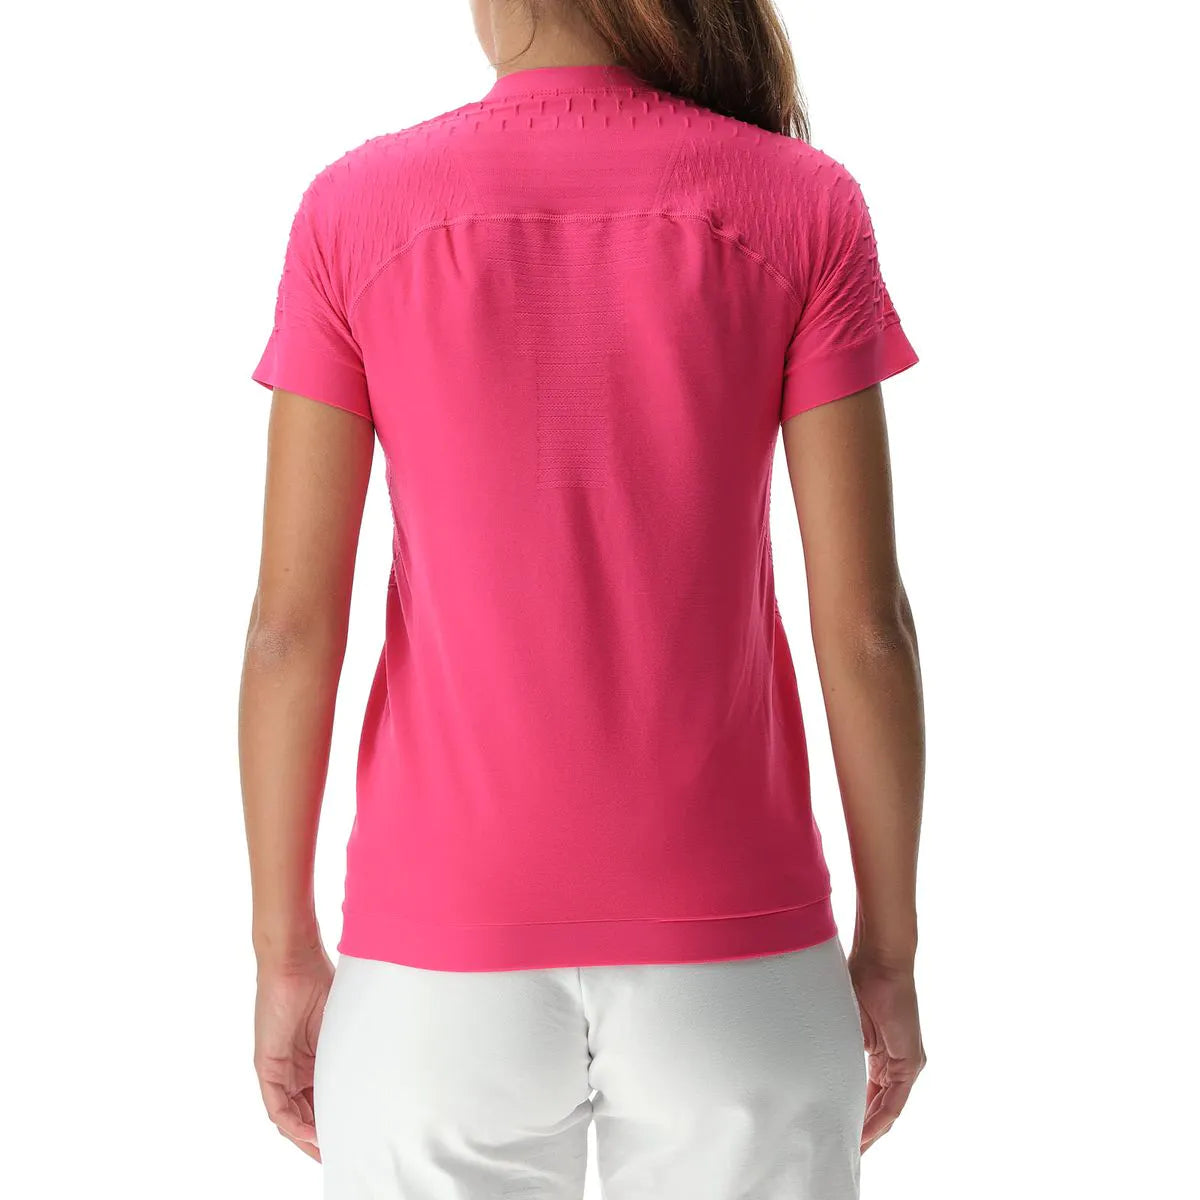 UYN Run Fit OW shirt - Pink Peacock (D)